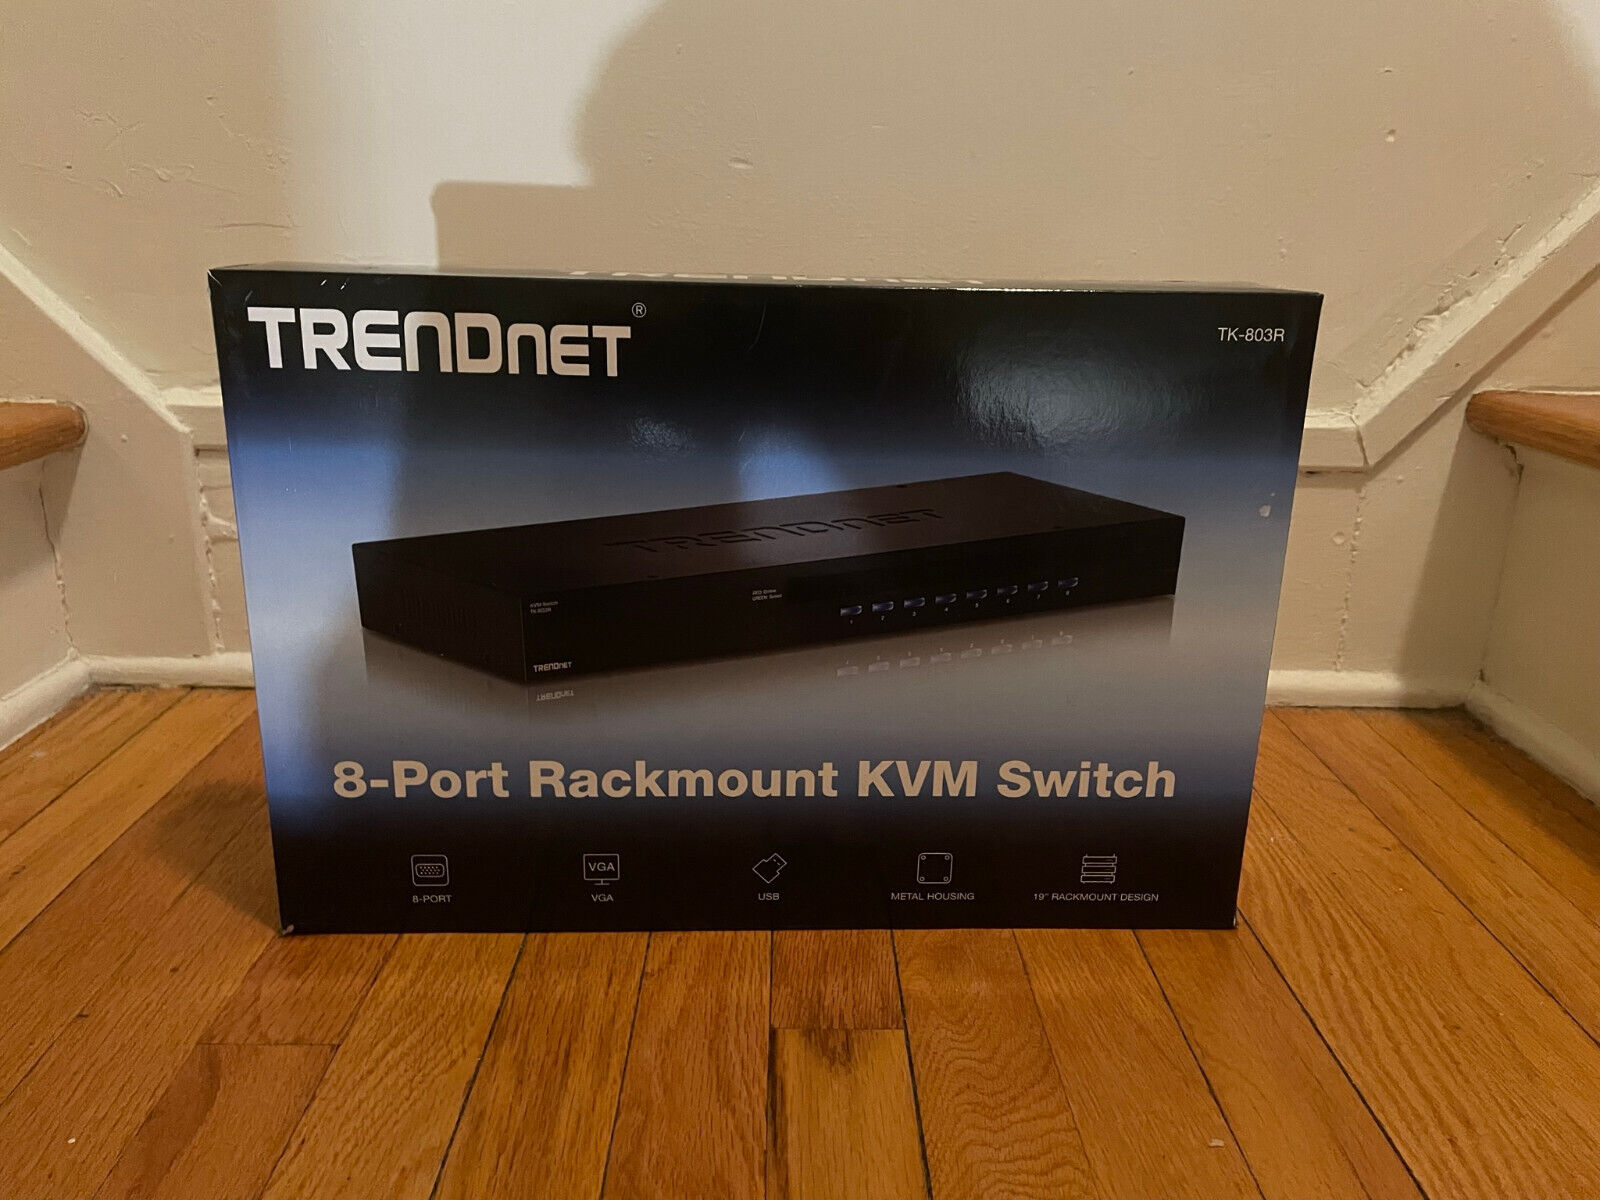 NEW TRENDnet TK-803R 8-port KVM USB Rack Mount OPEN BOX includes 